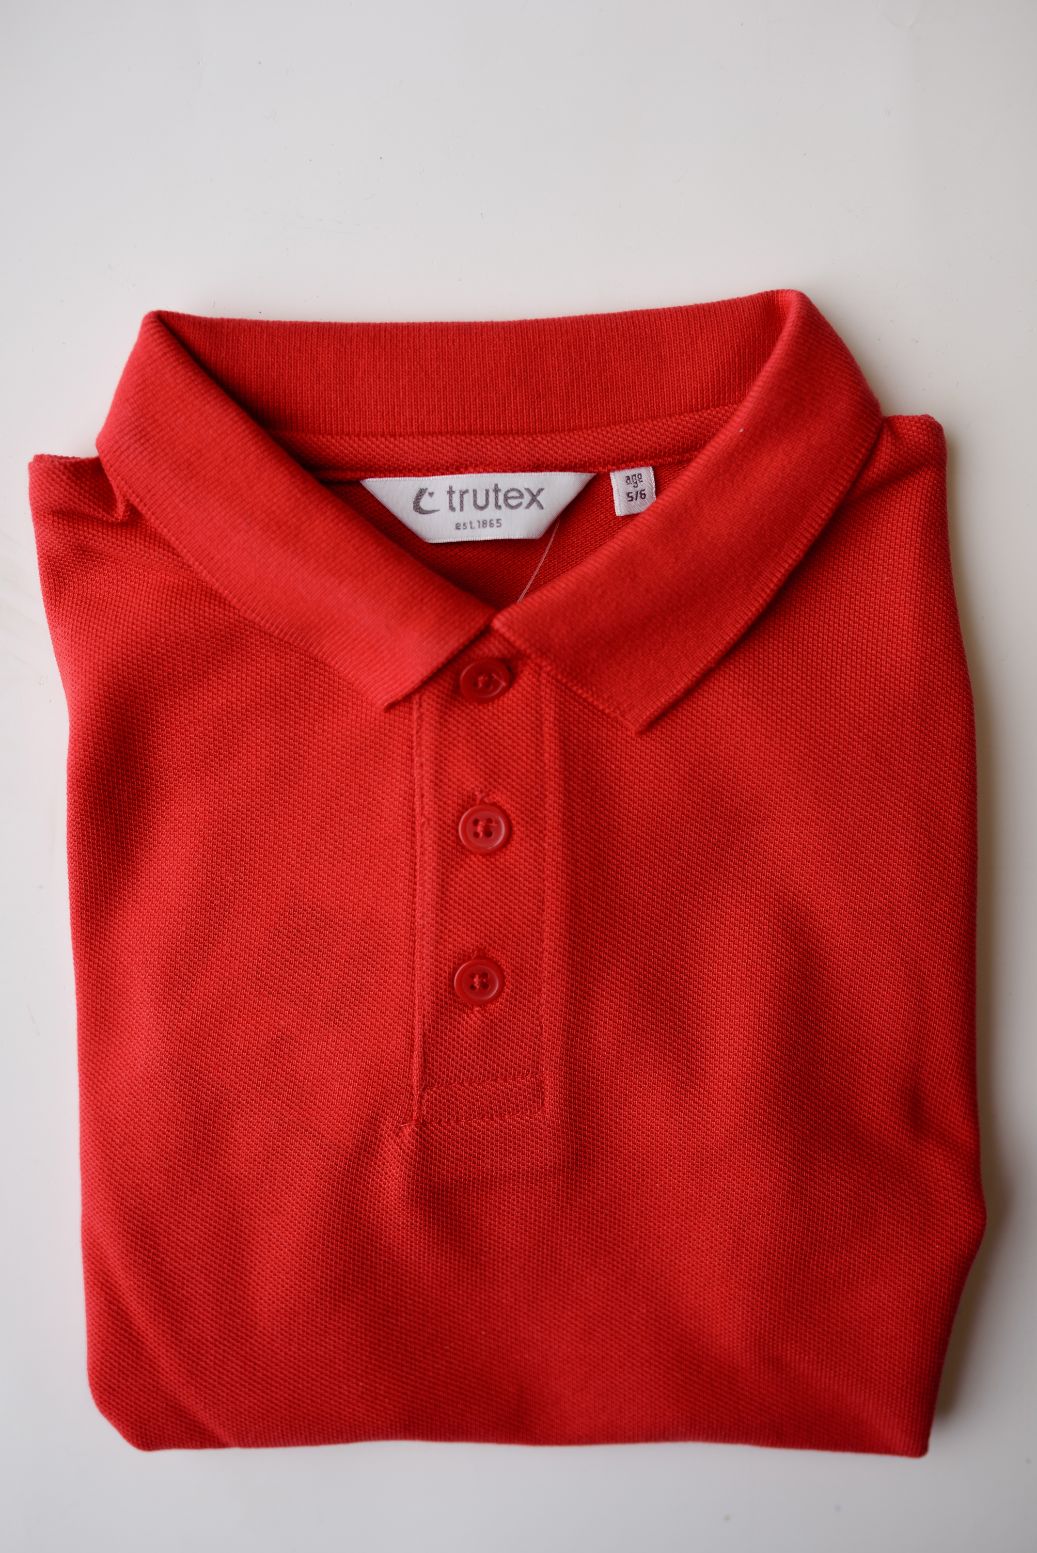 trutex red school polo shirt